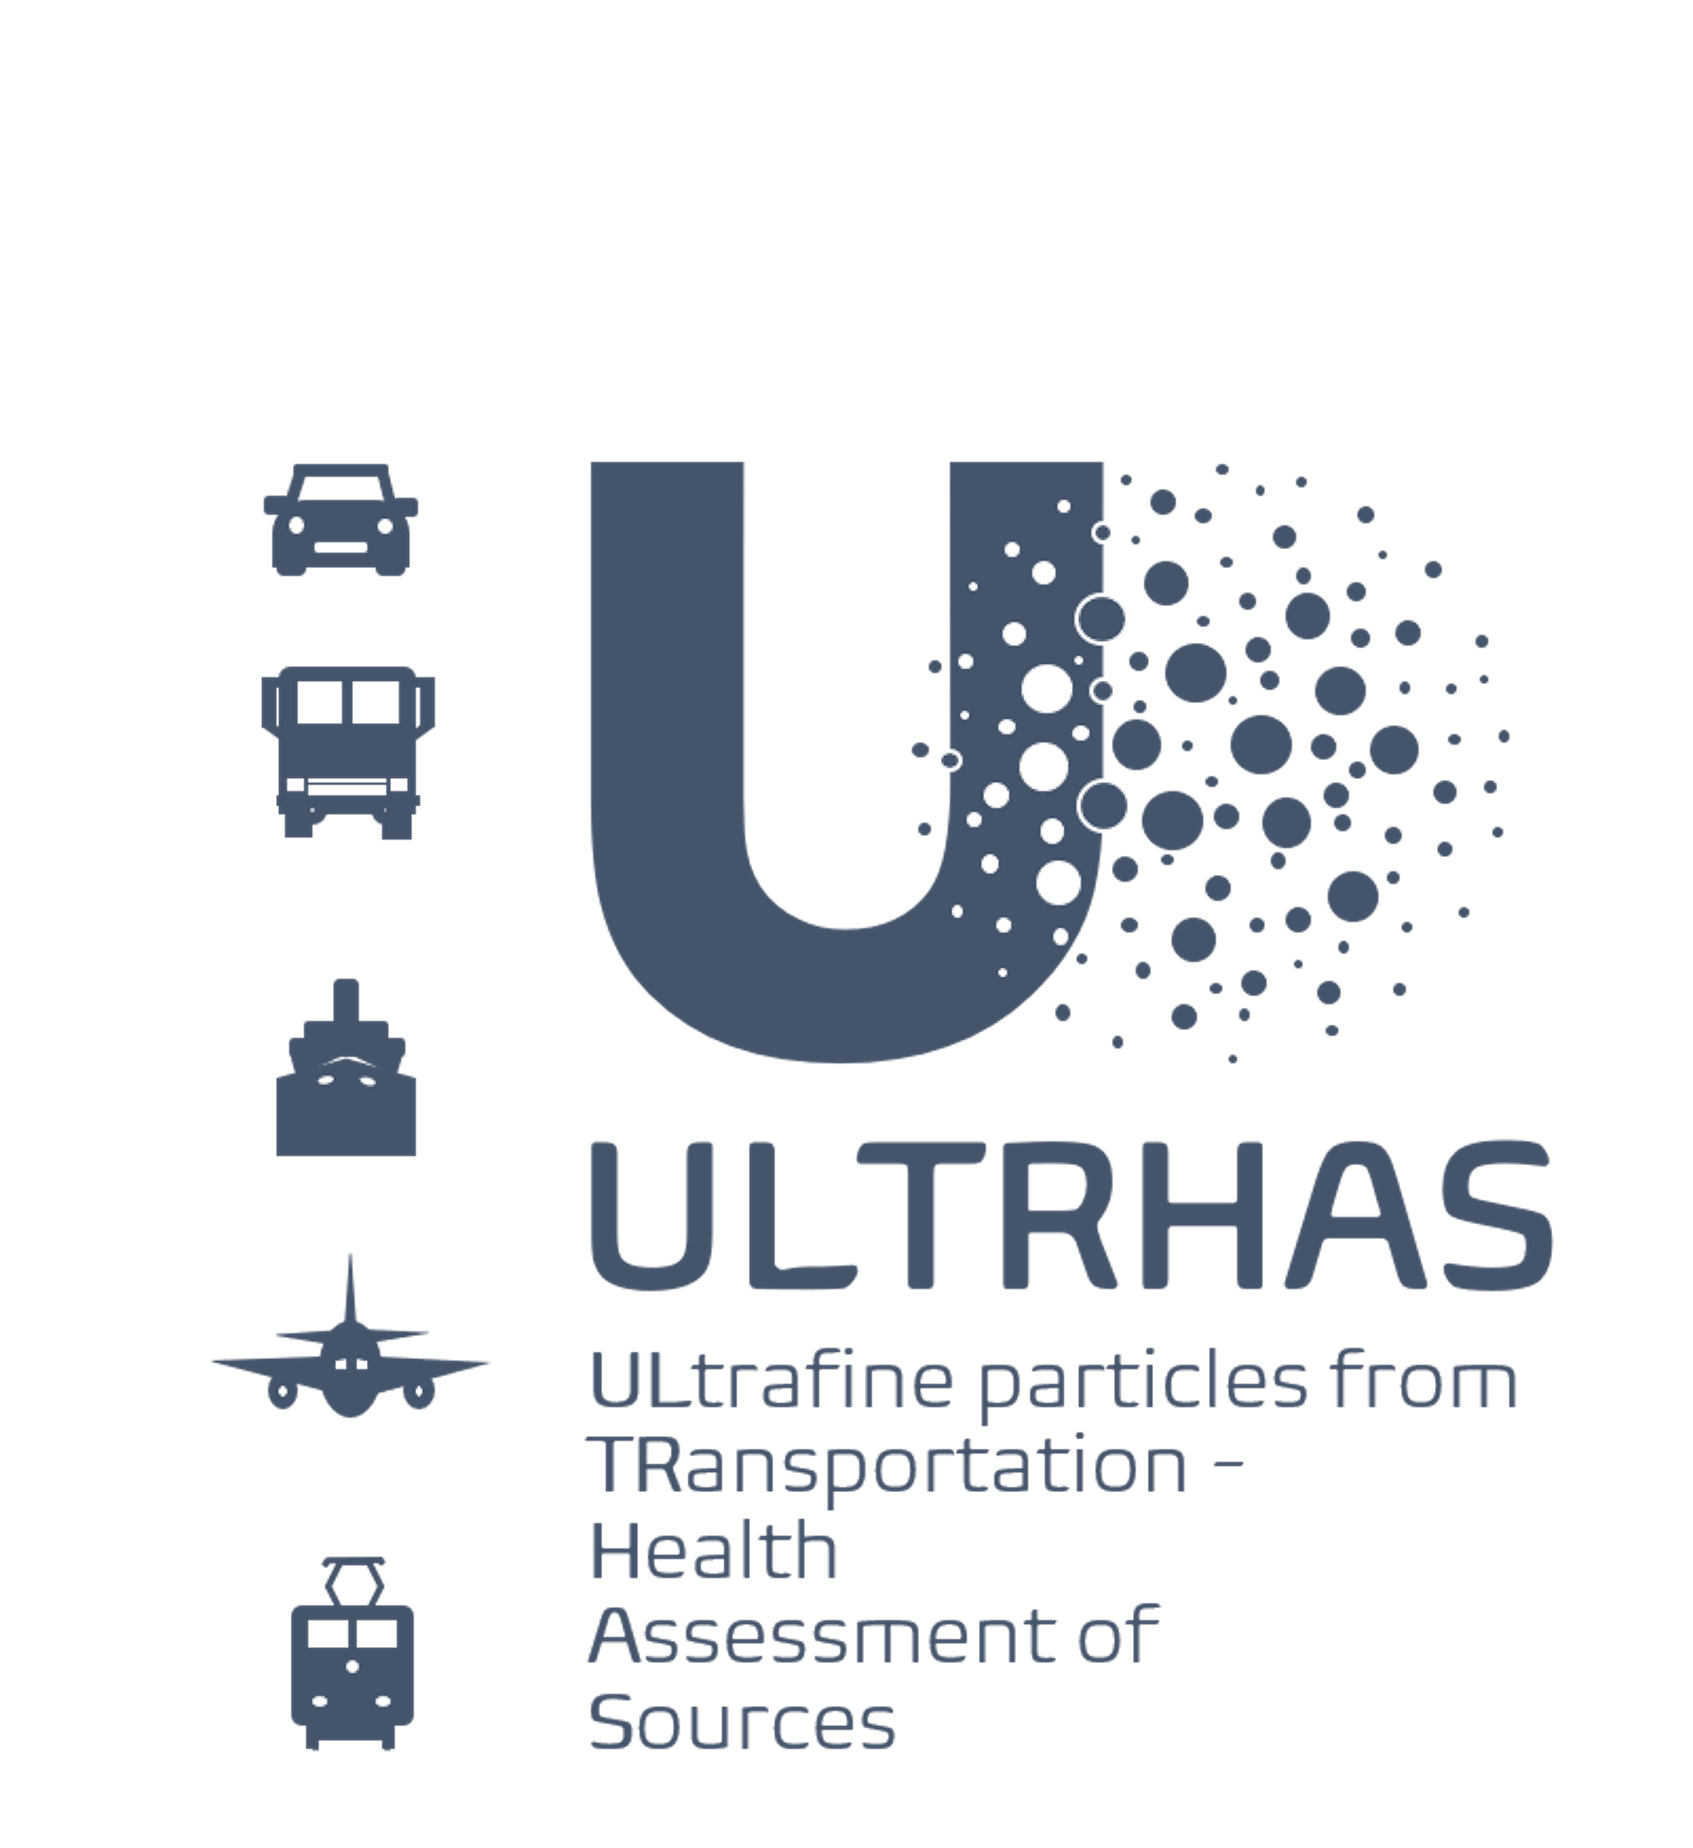 ULTRHAS_logo_complete.png